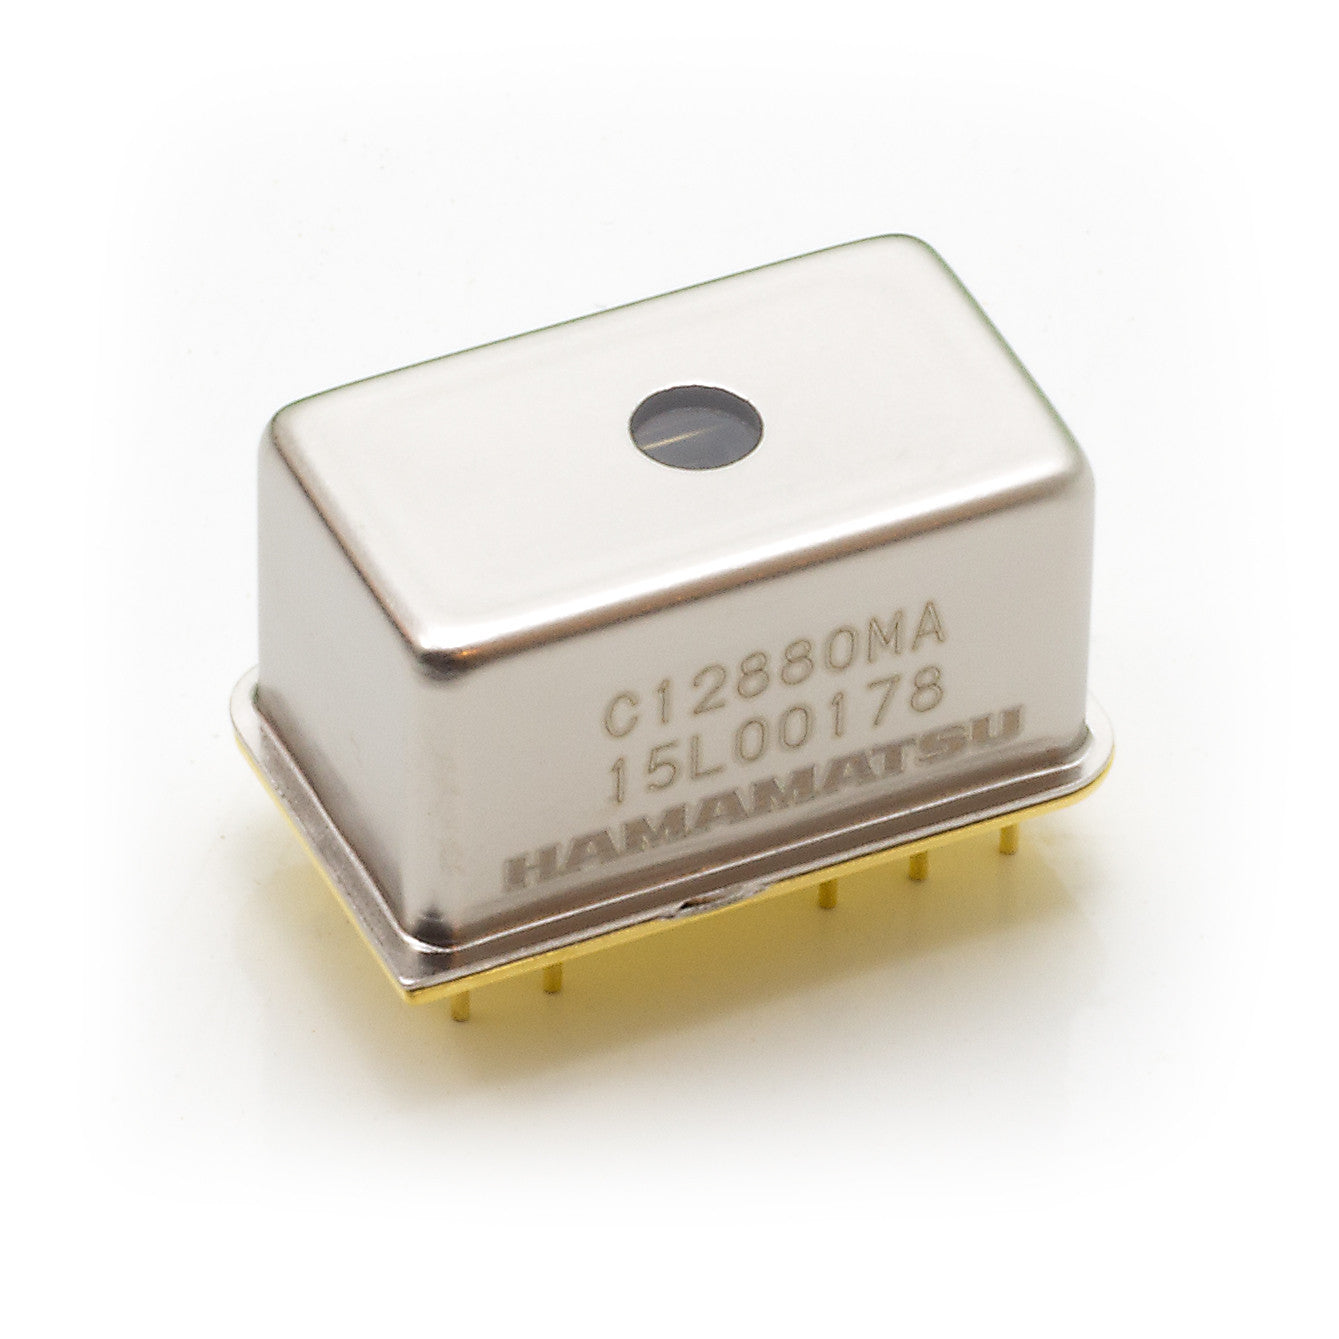 Hamamatsu C12880MA MEMS u-Spectrometer - GroupGets